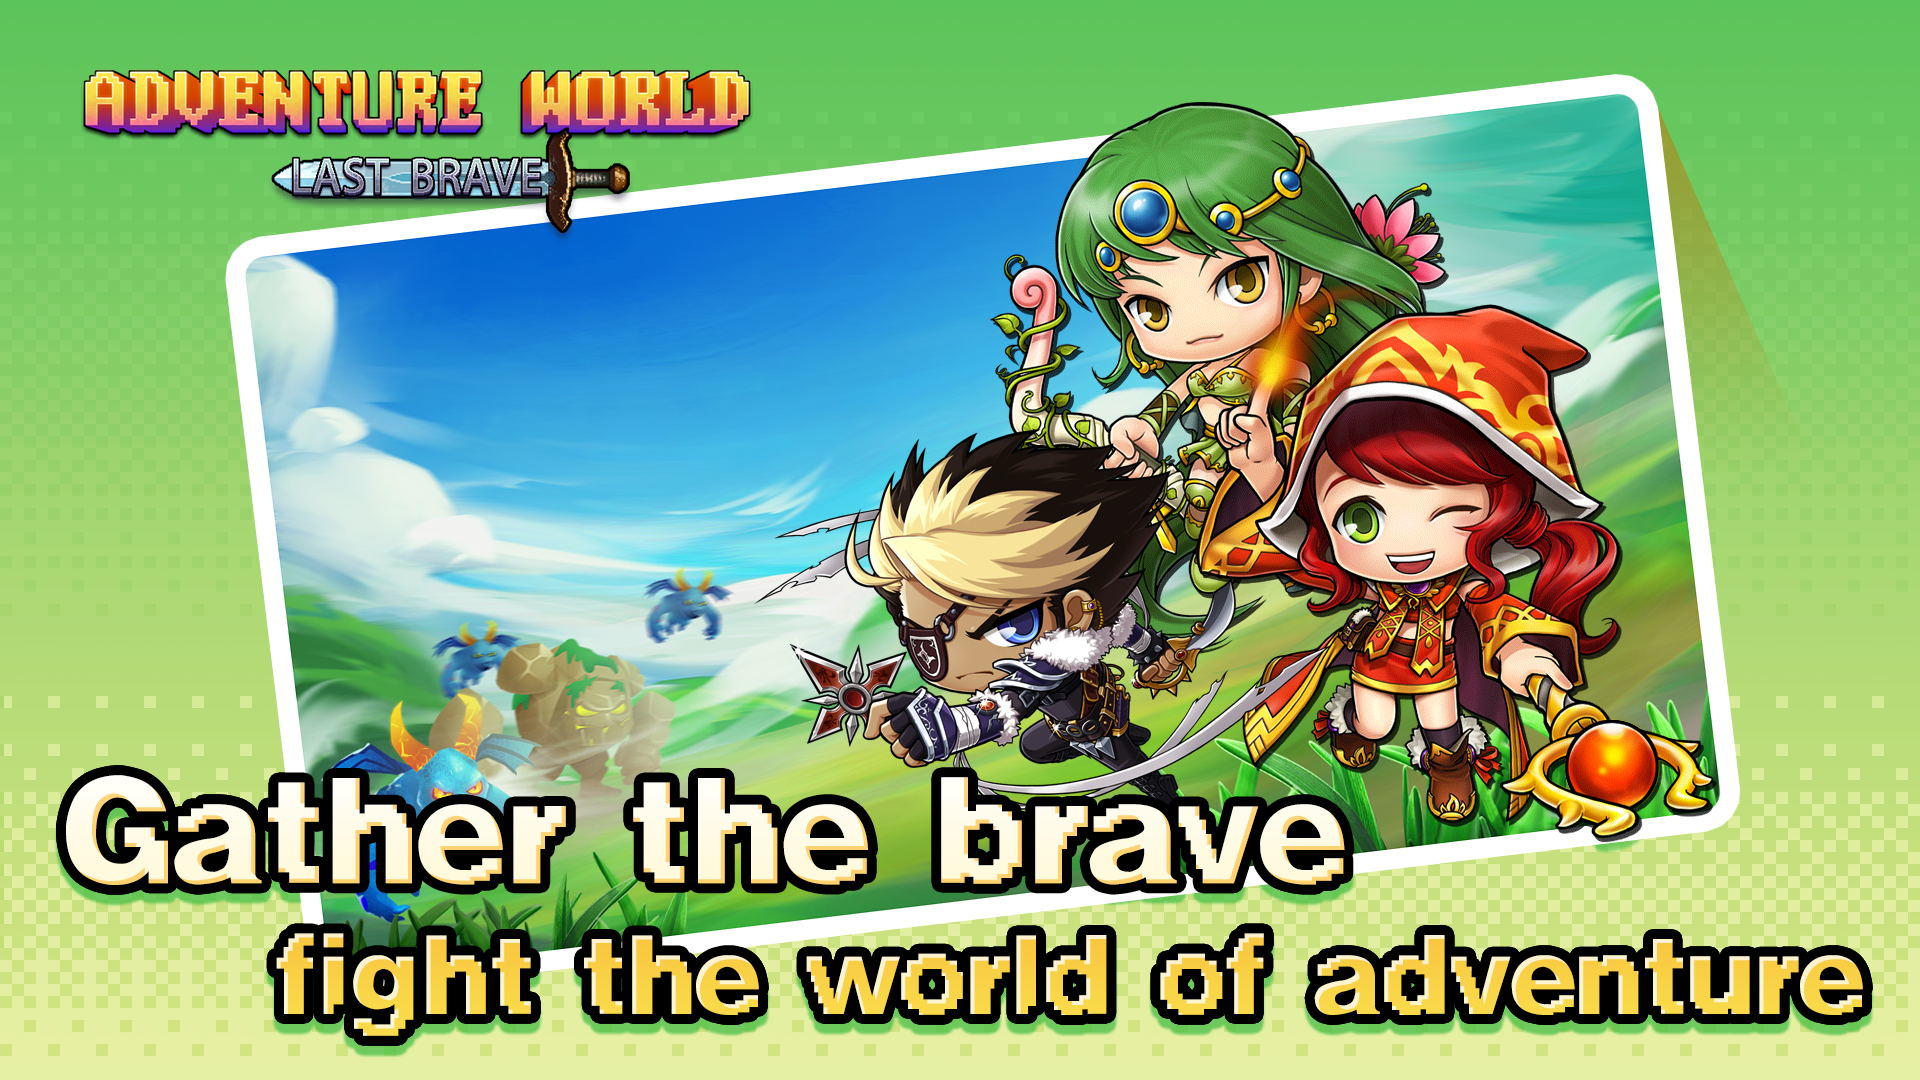 Screenshot 1 of Mundo da aventura: último corajoso 1.4.0